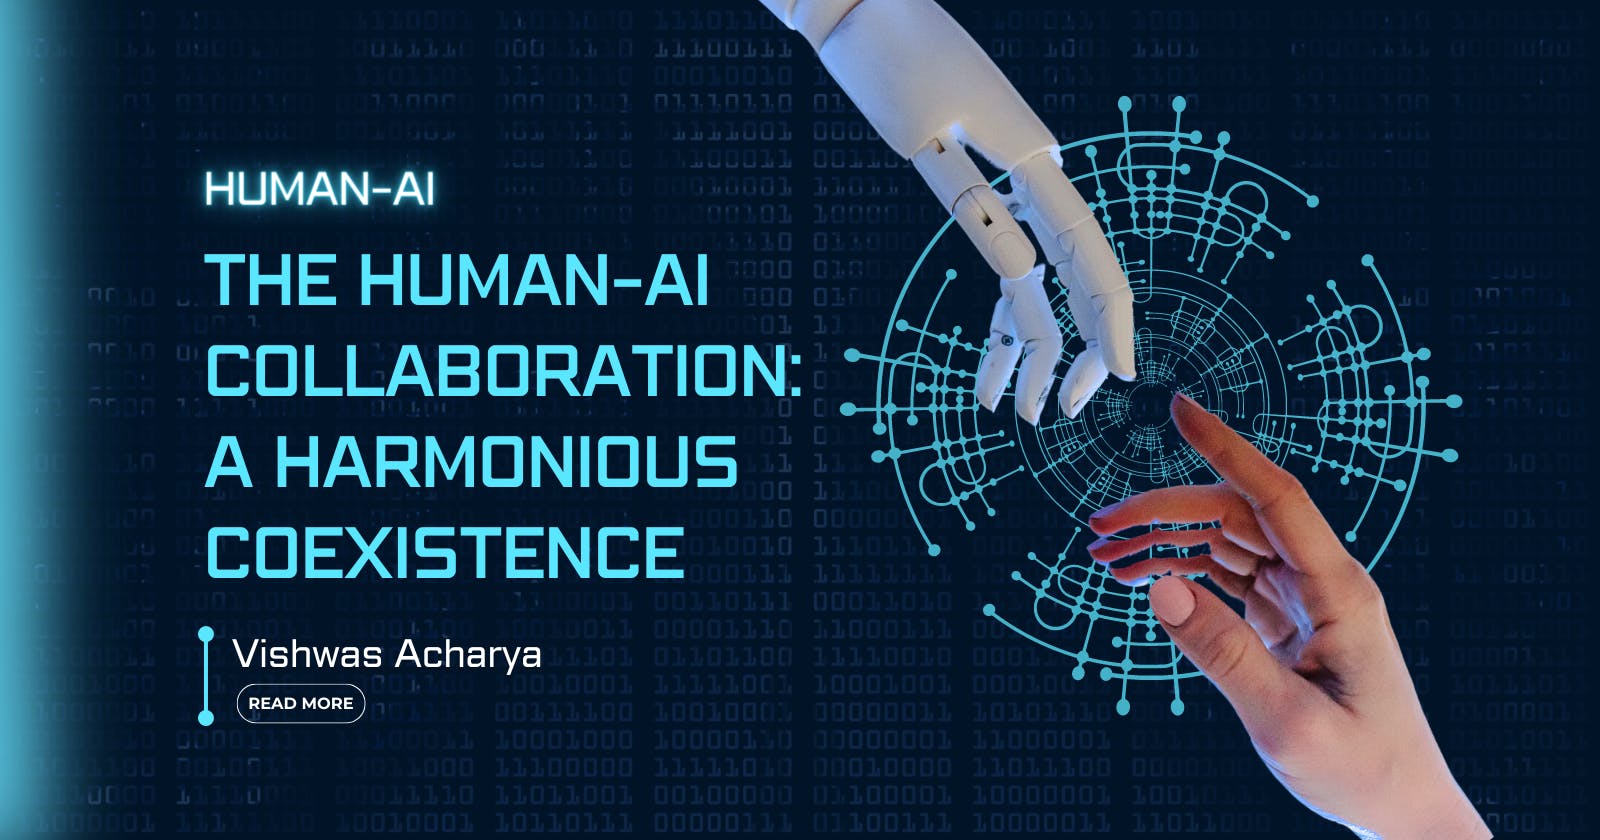 The Human-AI Collaboration: A Harmonious Coexistence